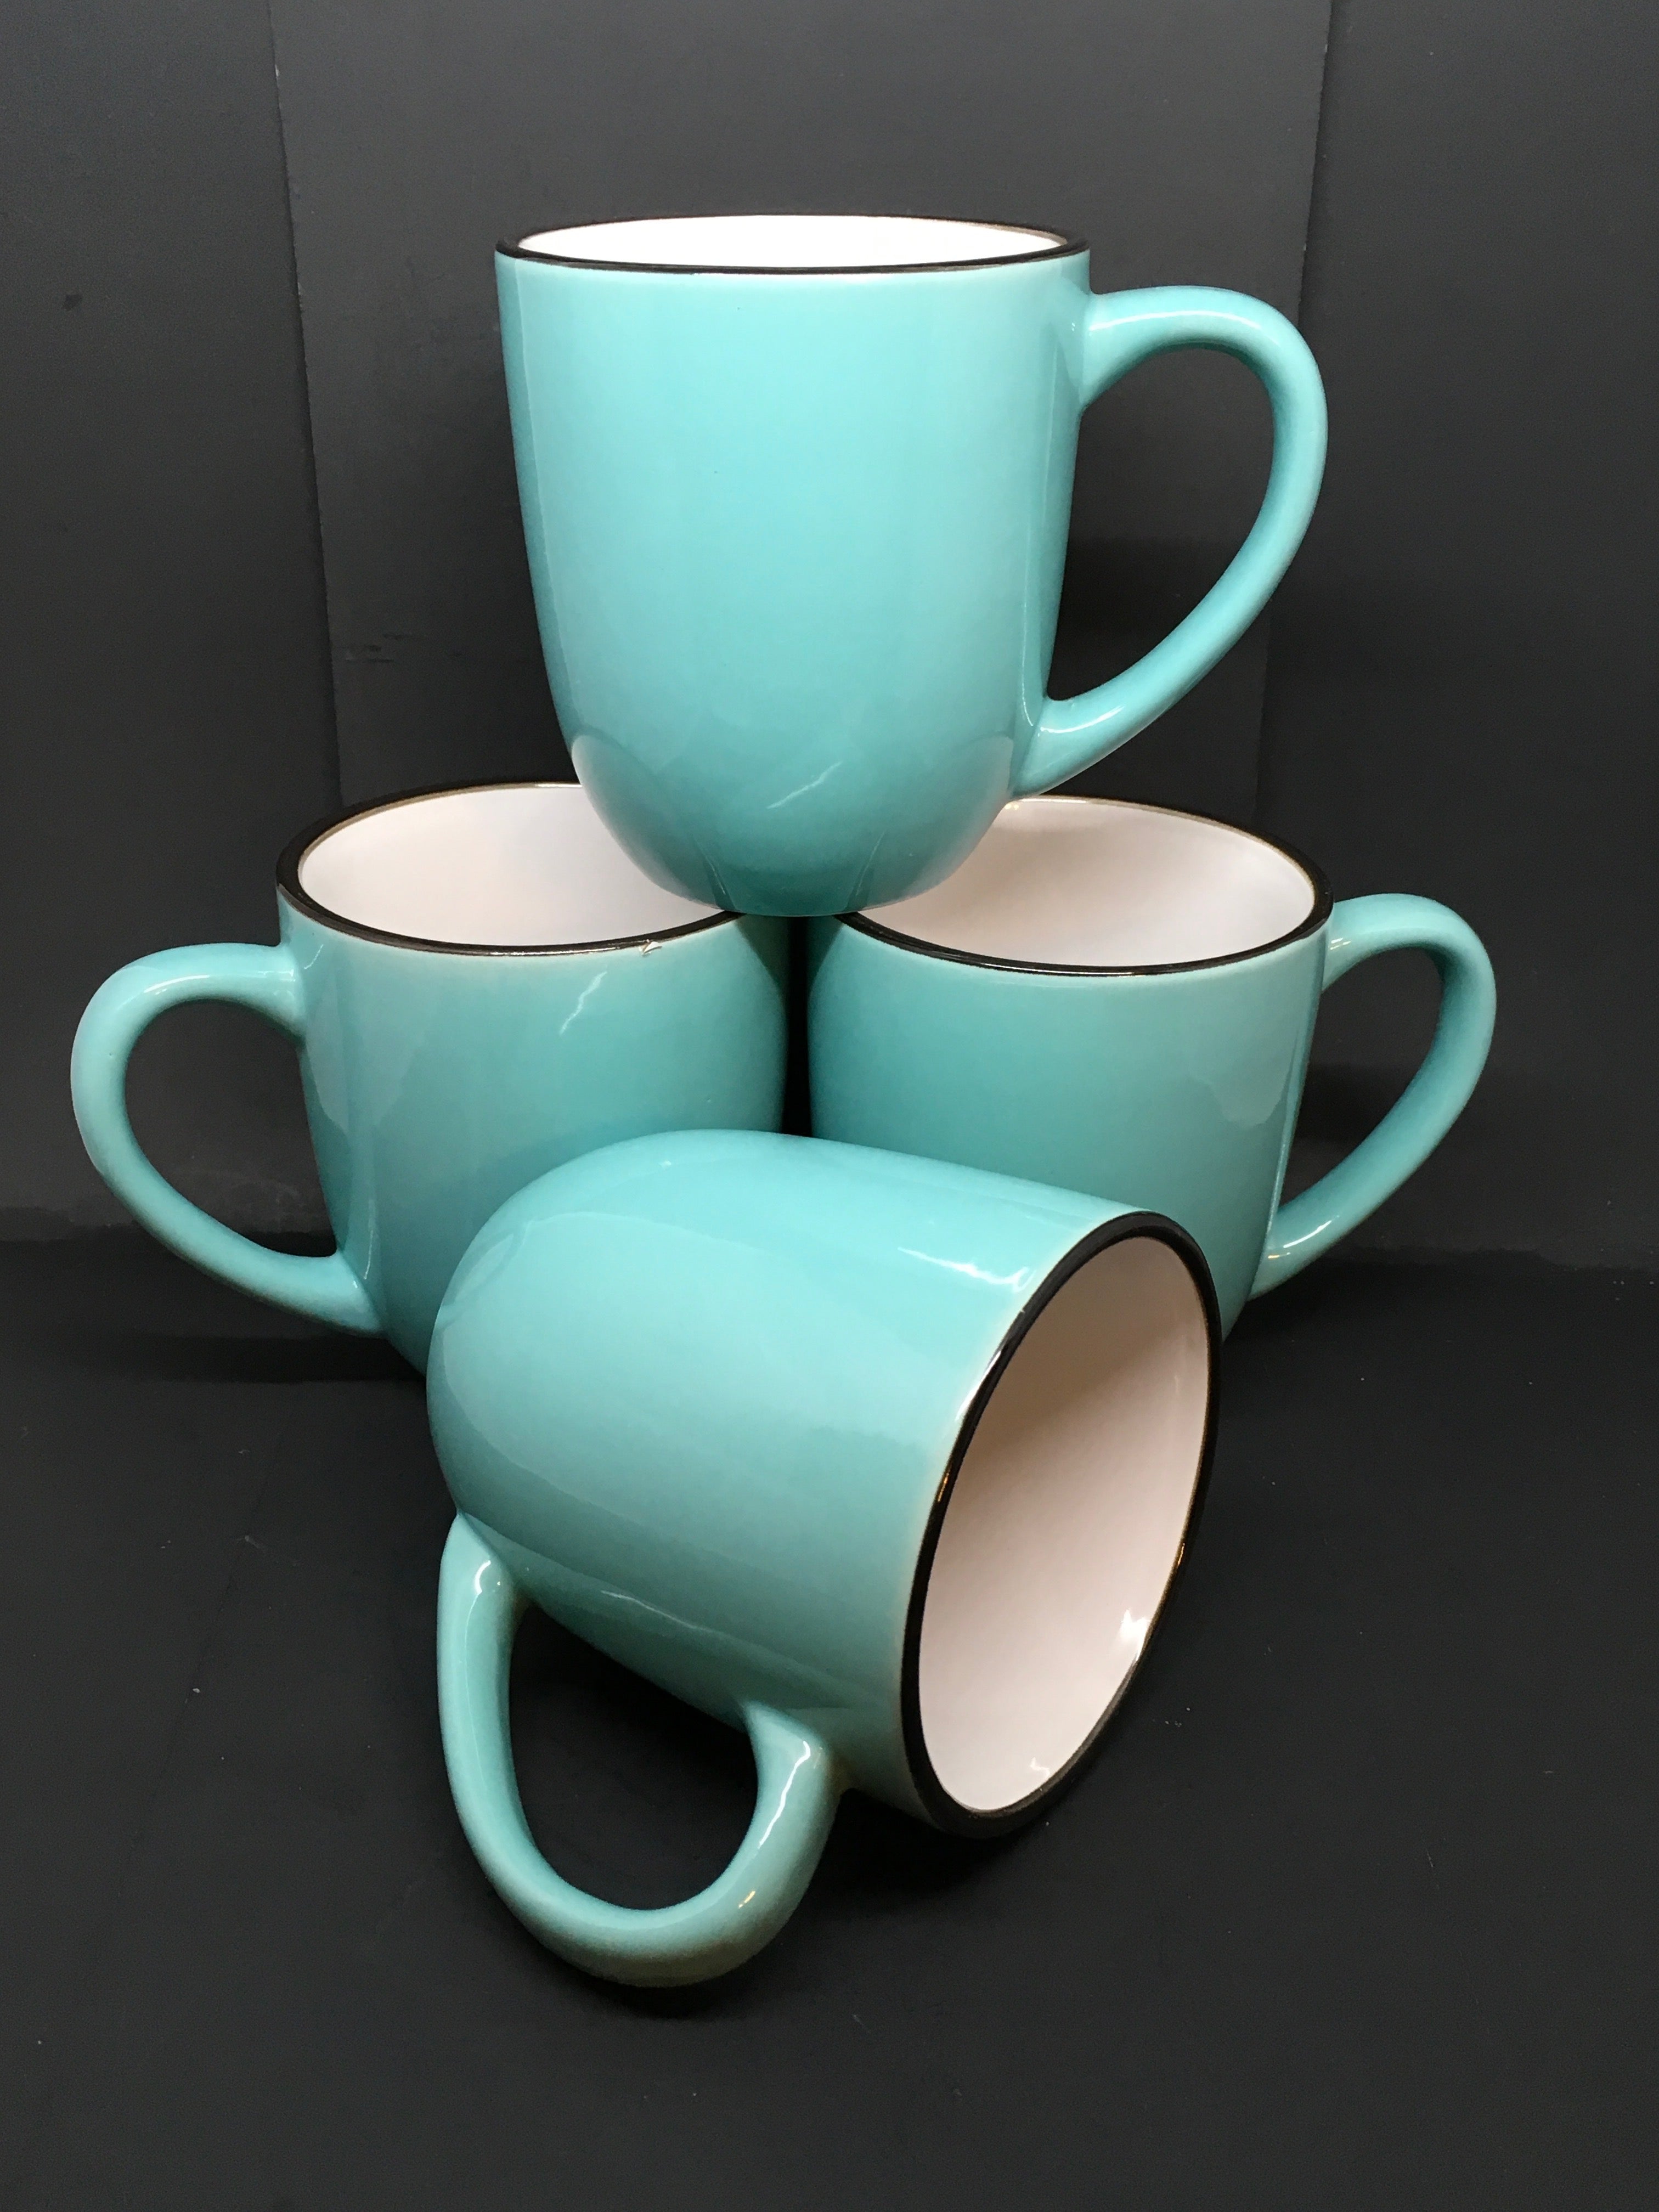 American Atelier Coffee Mug Set with Coffee Mug Rack | Ceramic Coffee Mugs  Set of 4 | Stackable Coffee Mugs with Rack | Coffee Cup Set with Coffee Cup